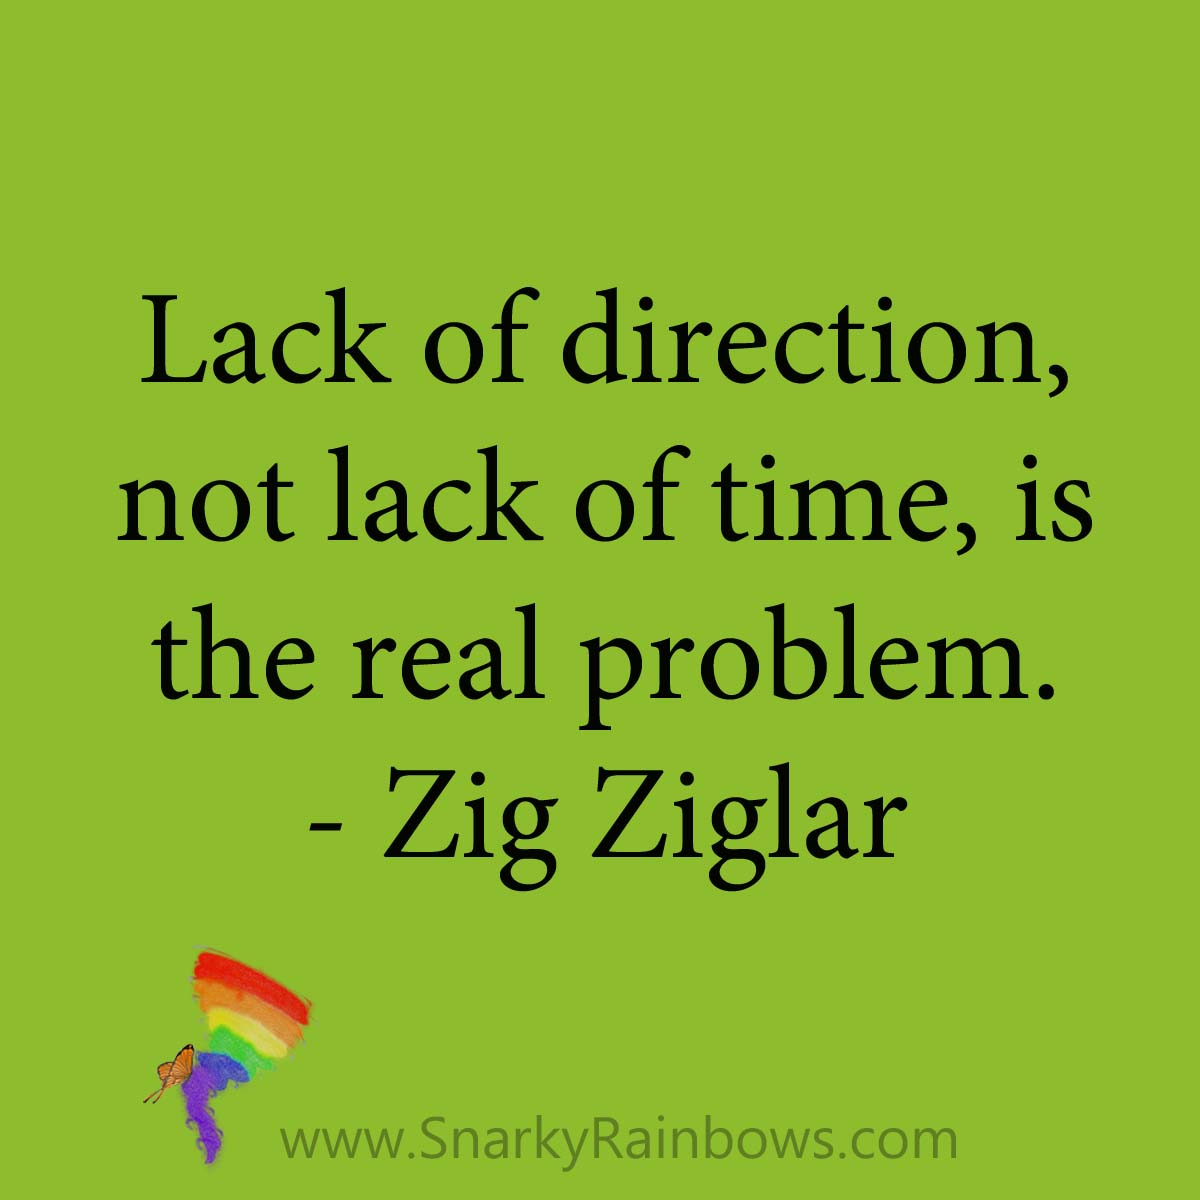 Zig Ziglar quote - lack of direction